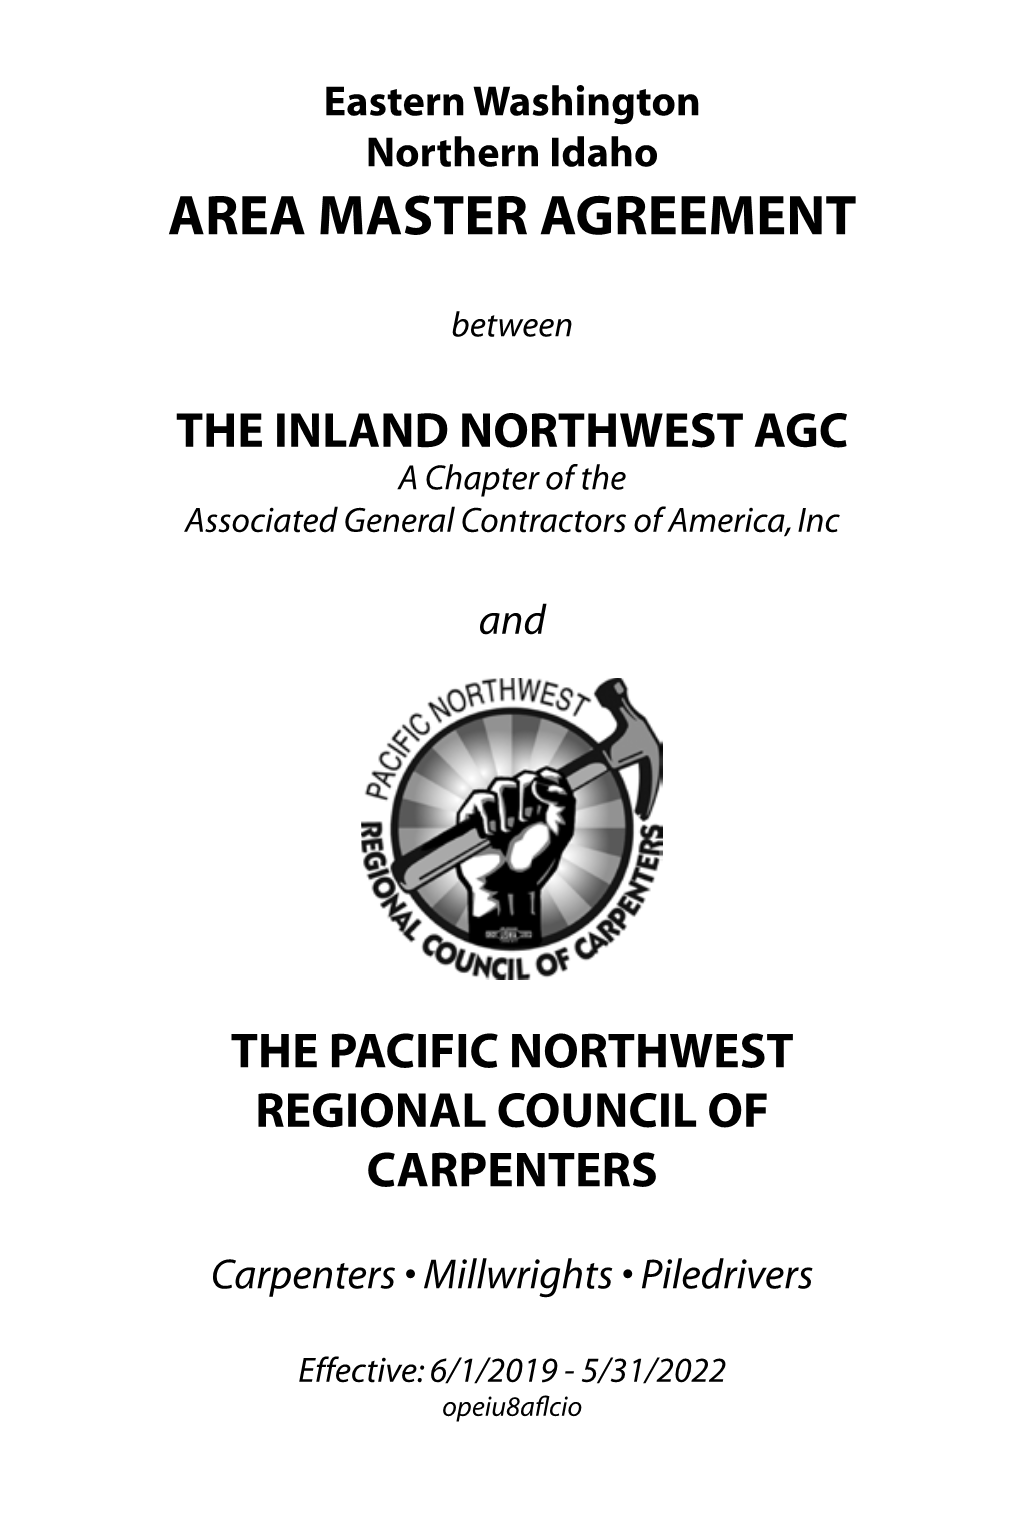 Eastern Washington Northern Idaho Area Master Agreement 6-1-19 to 5-31-22